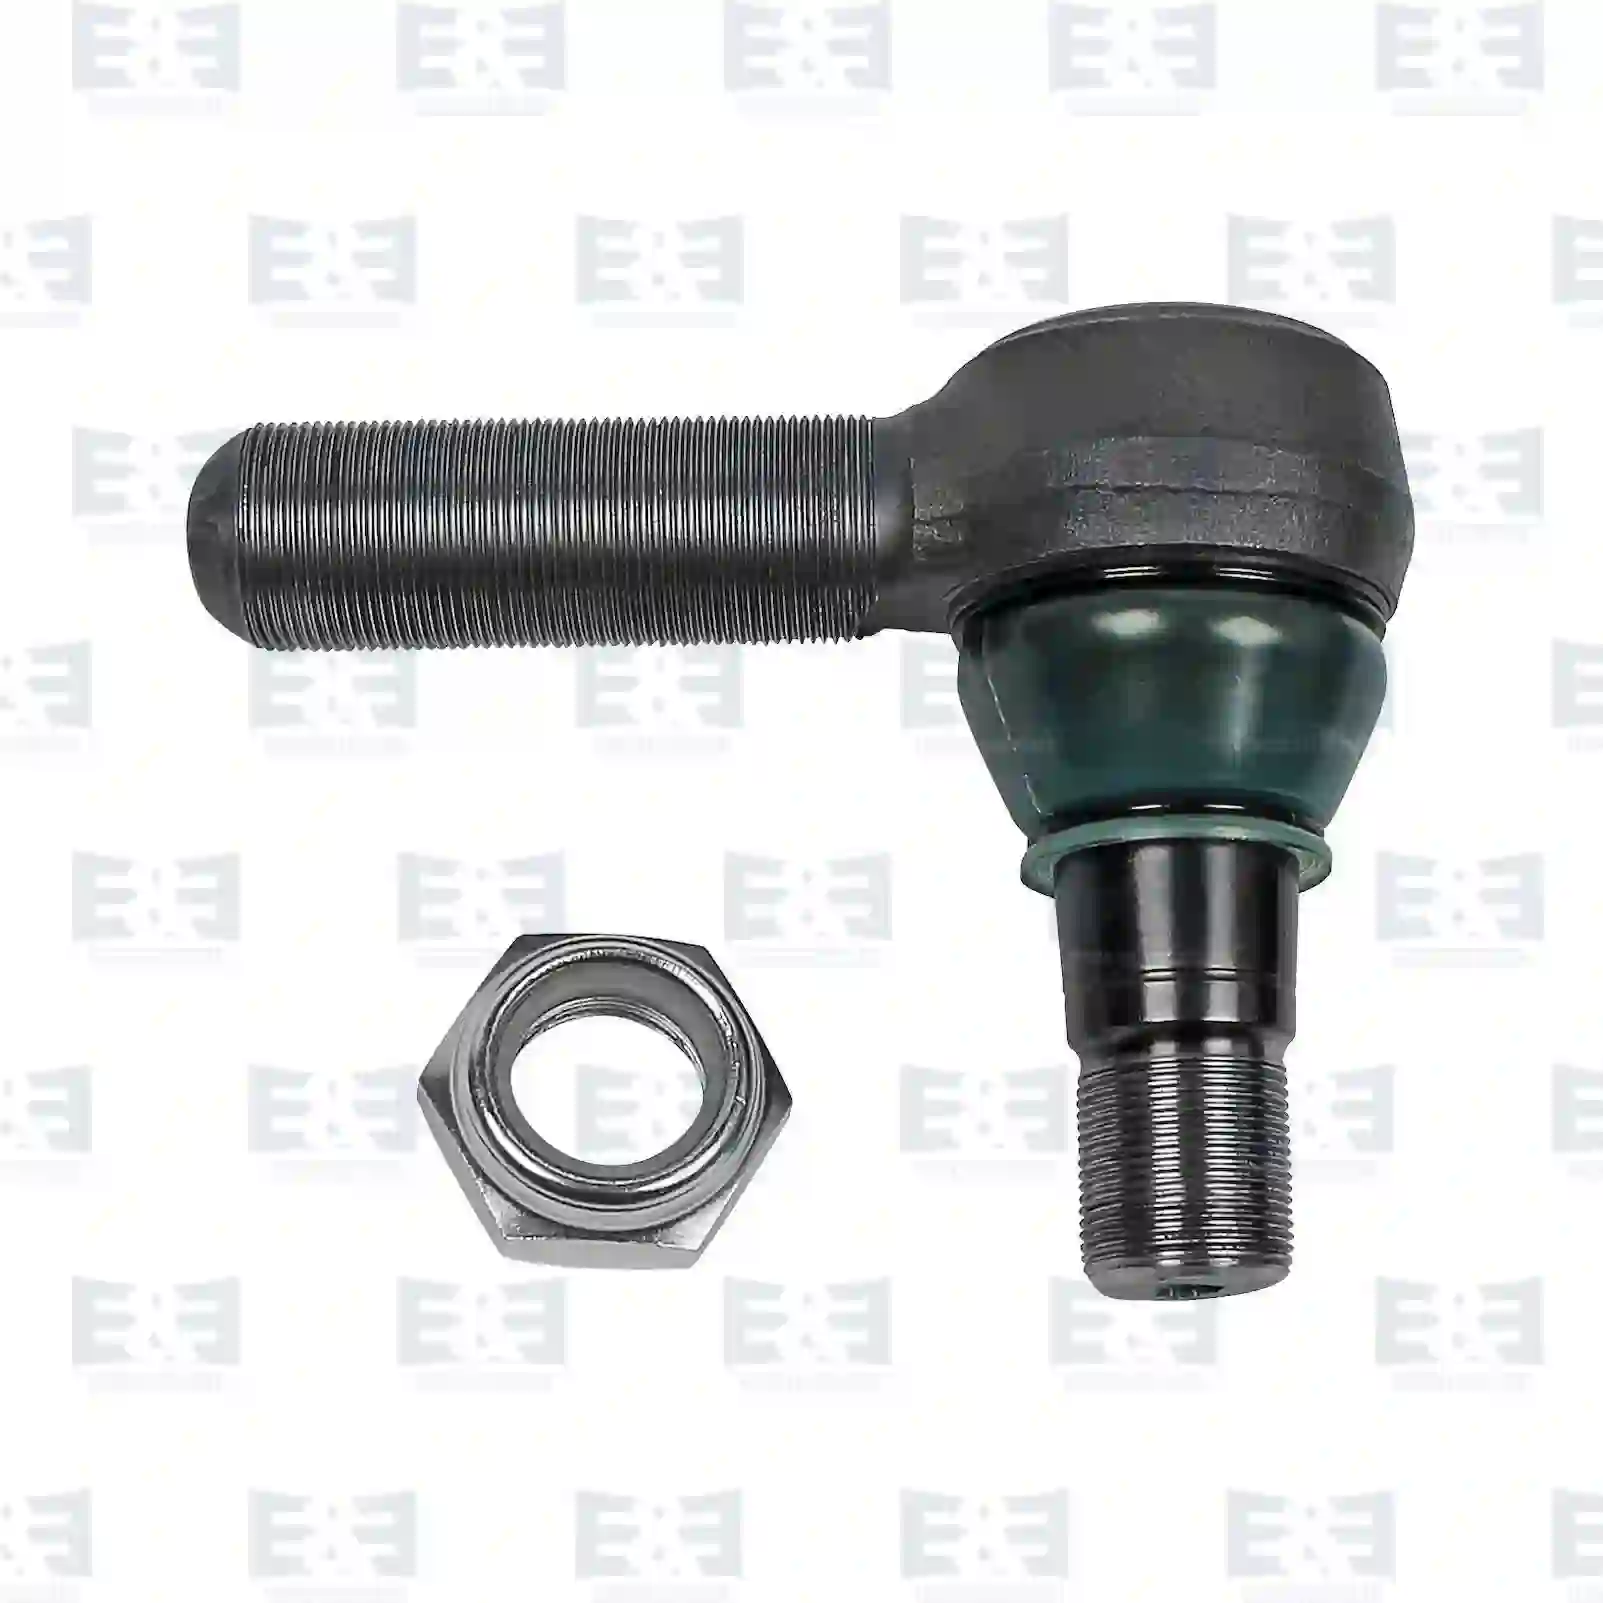  Ball joint, right hand thread || E&E Truck Spare Parts | Truck Spare Parts, Auotomotive Spare Parts